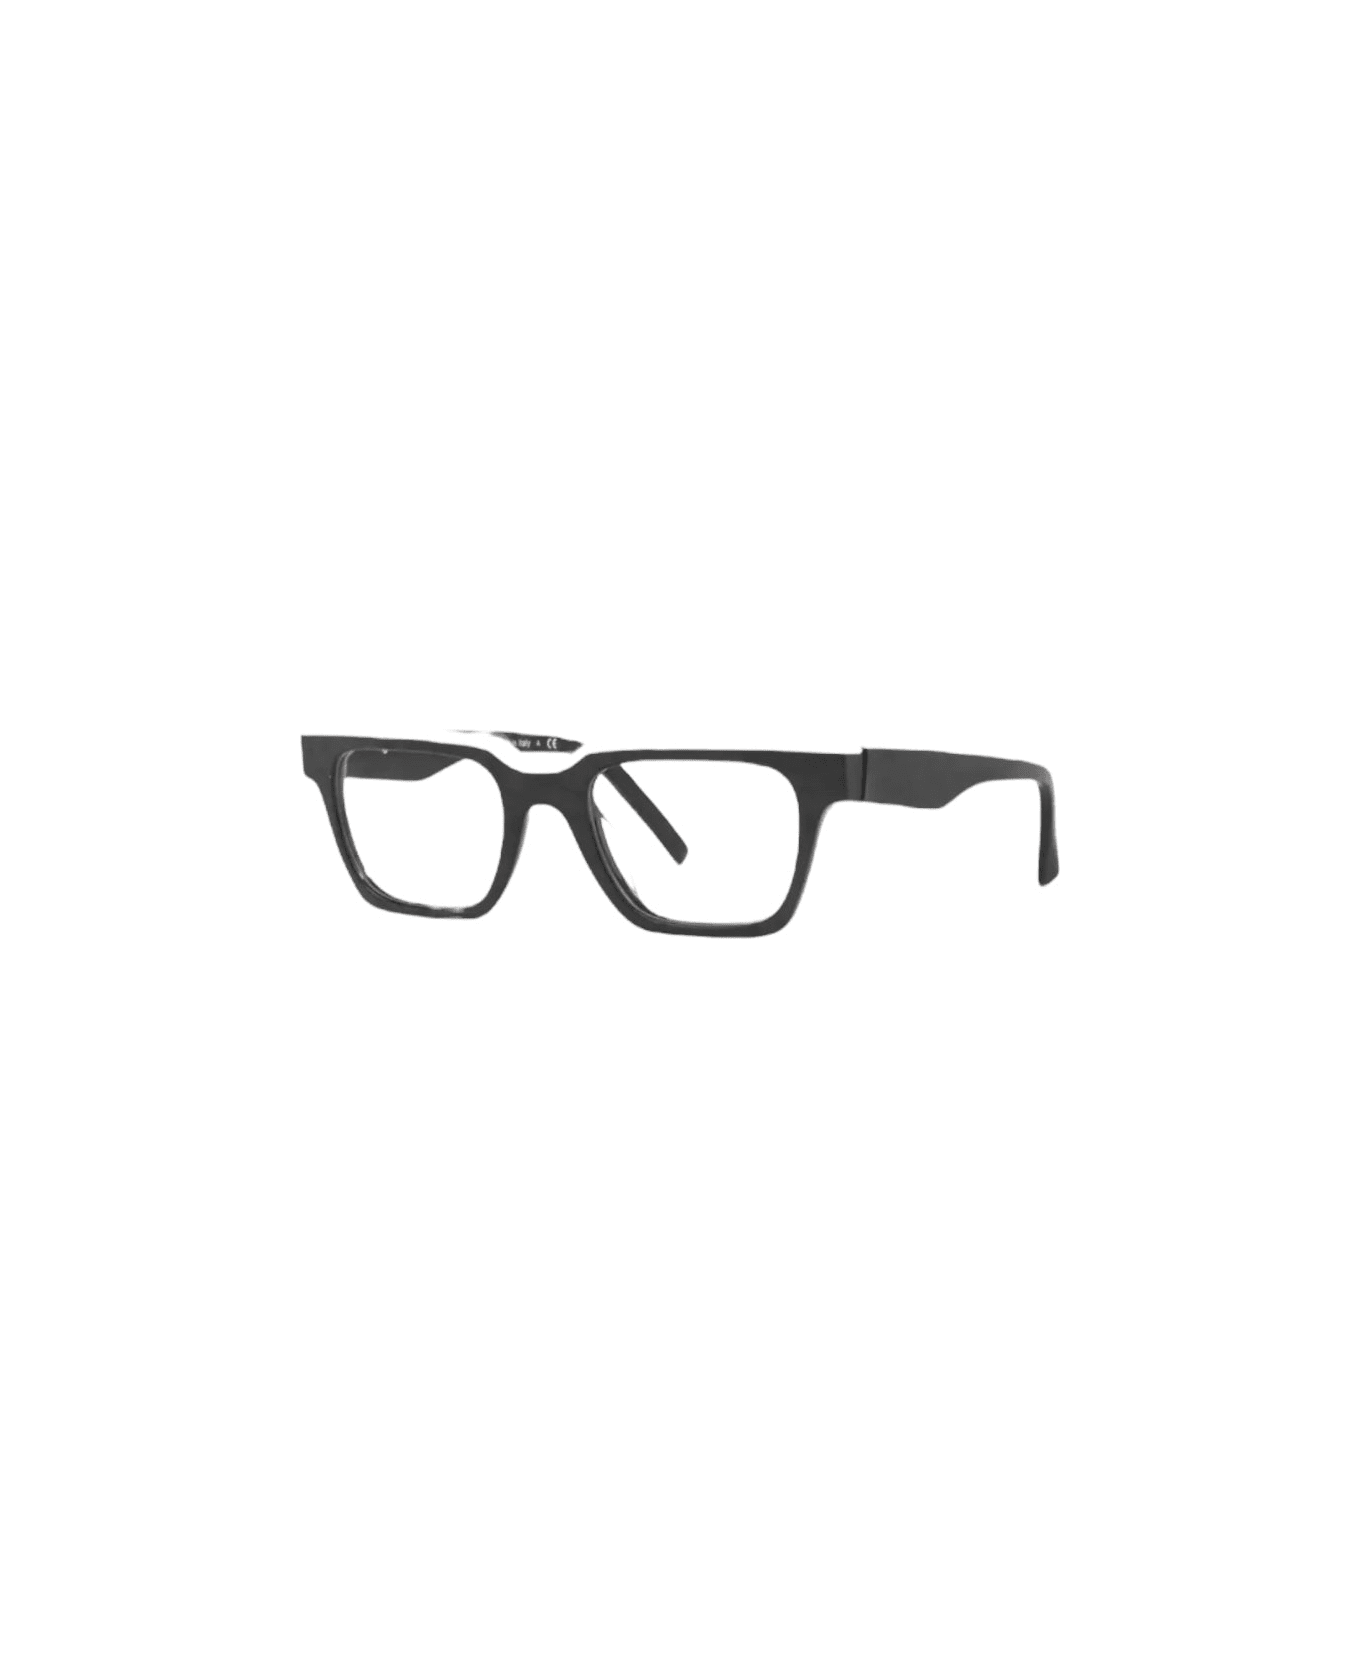 Alain Mikli Verney - A03093 - Black/white Glasses アイウェア